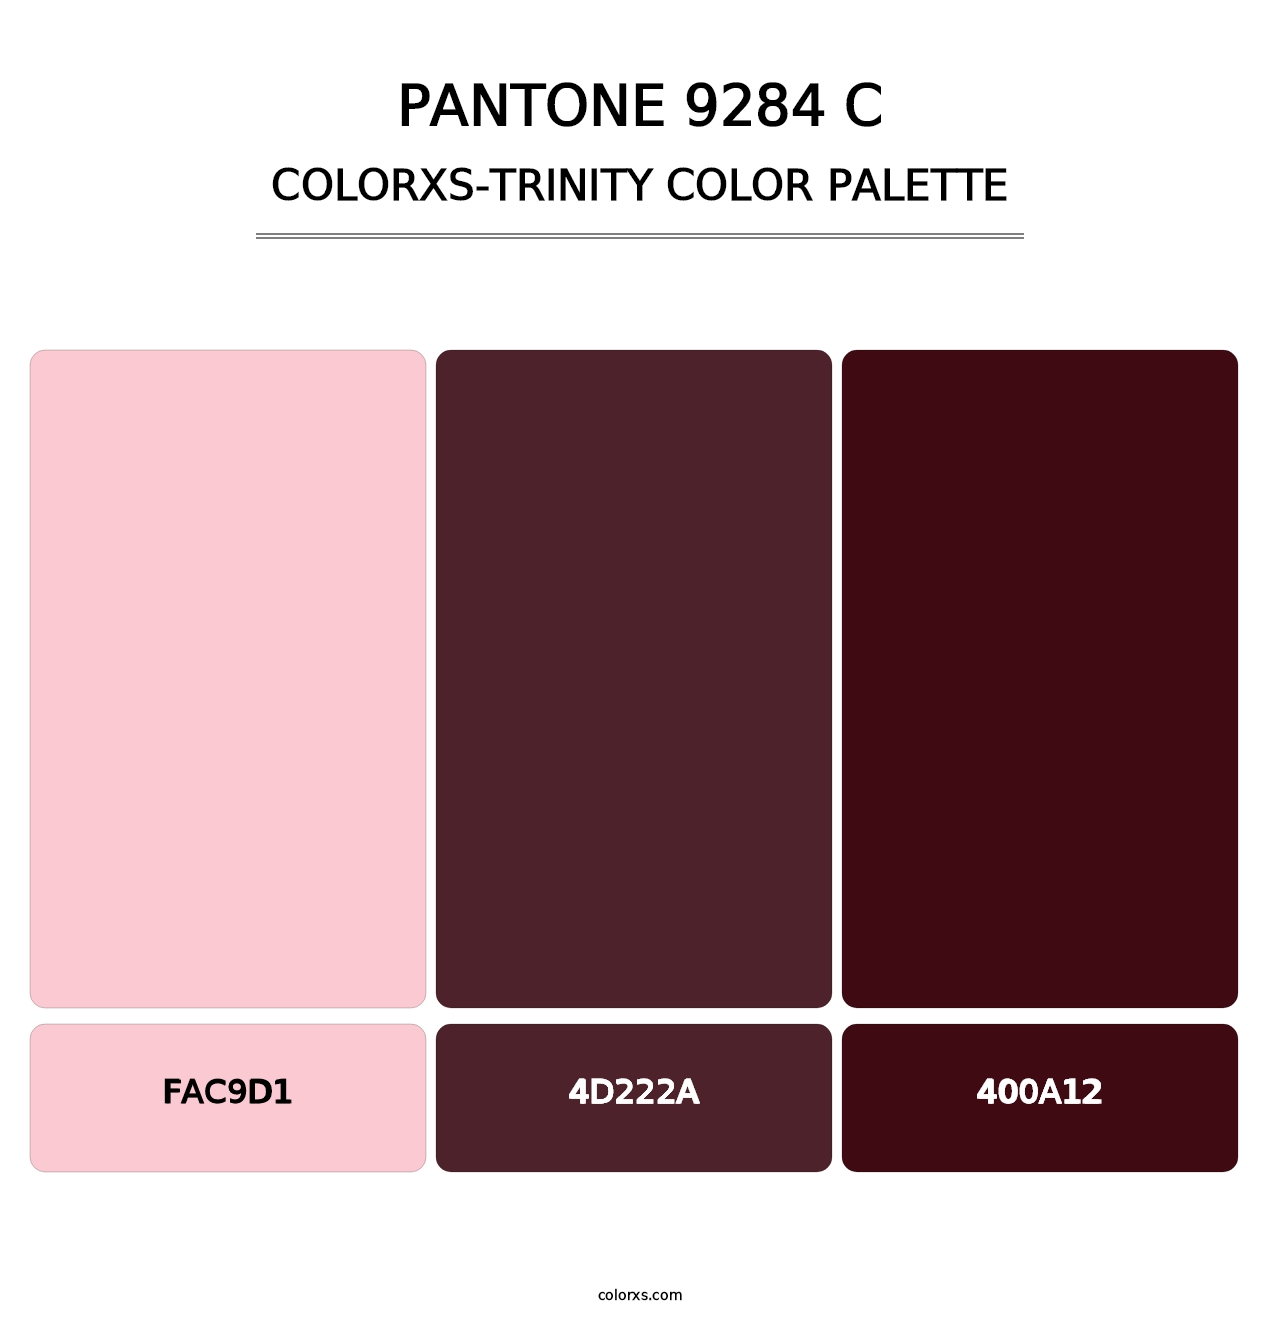 PANTONE 9284 C - Colorxs Trinity Palette